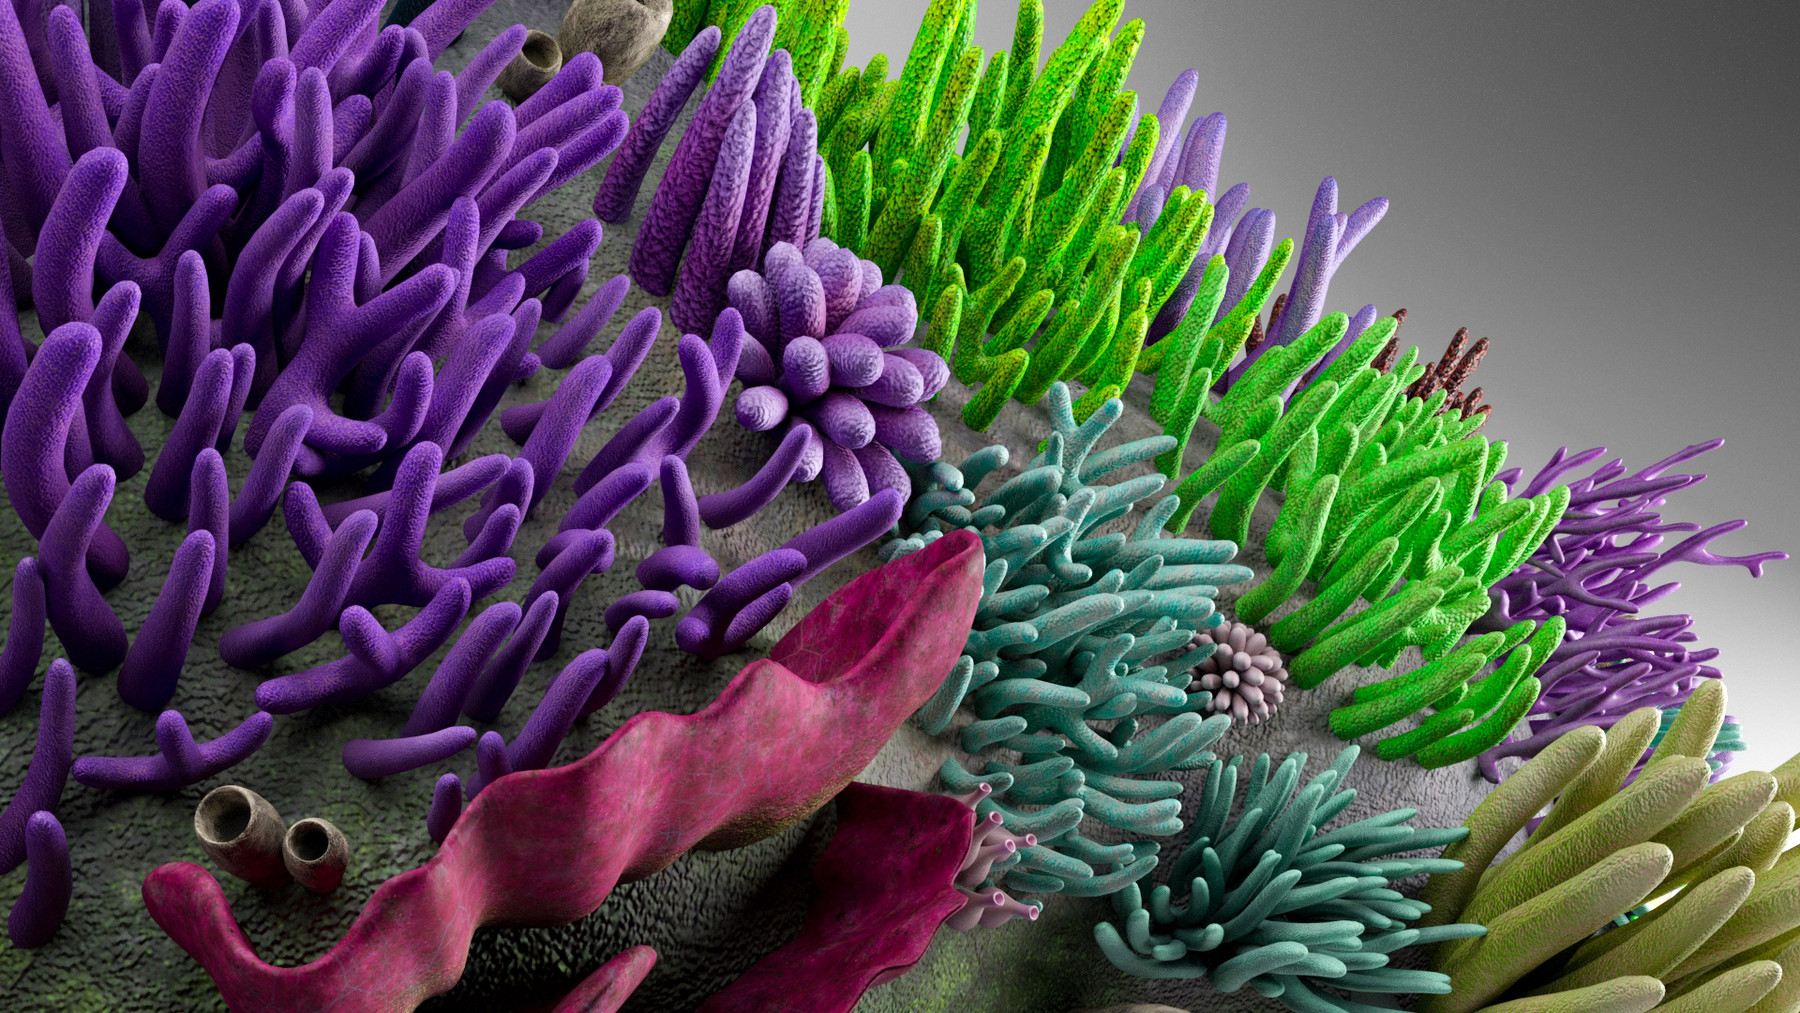 ArtStation - 3D Underwater Ocean Coral Reef | Resources